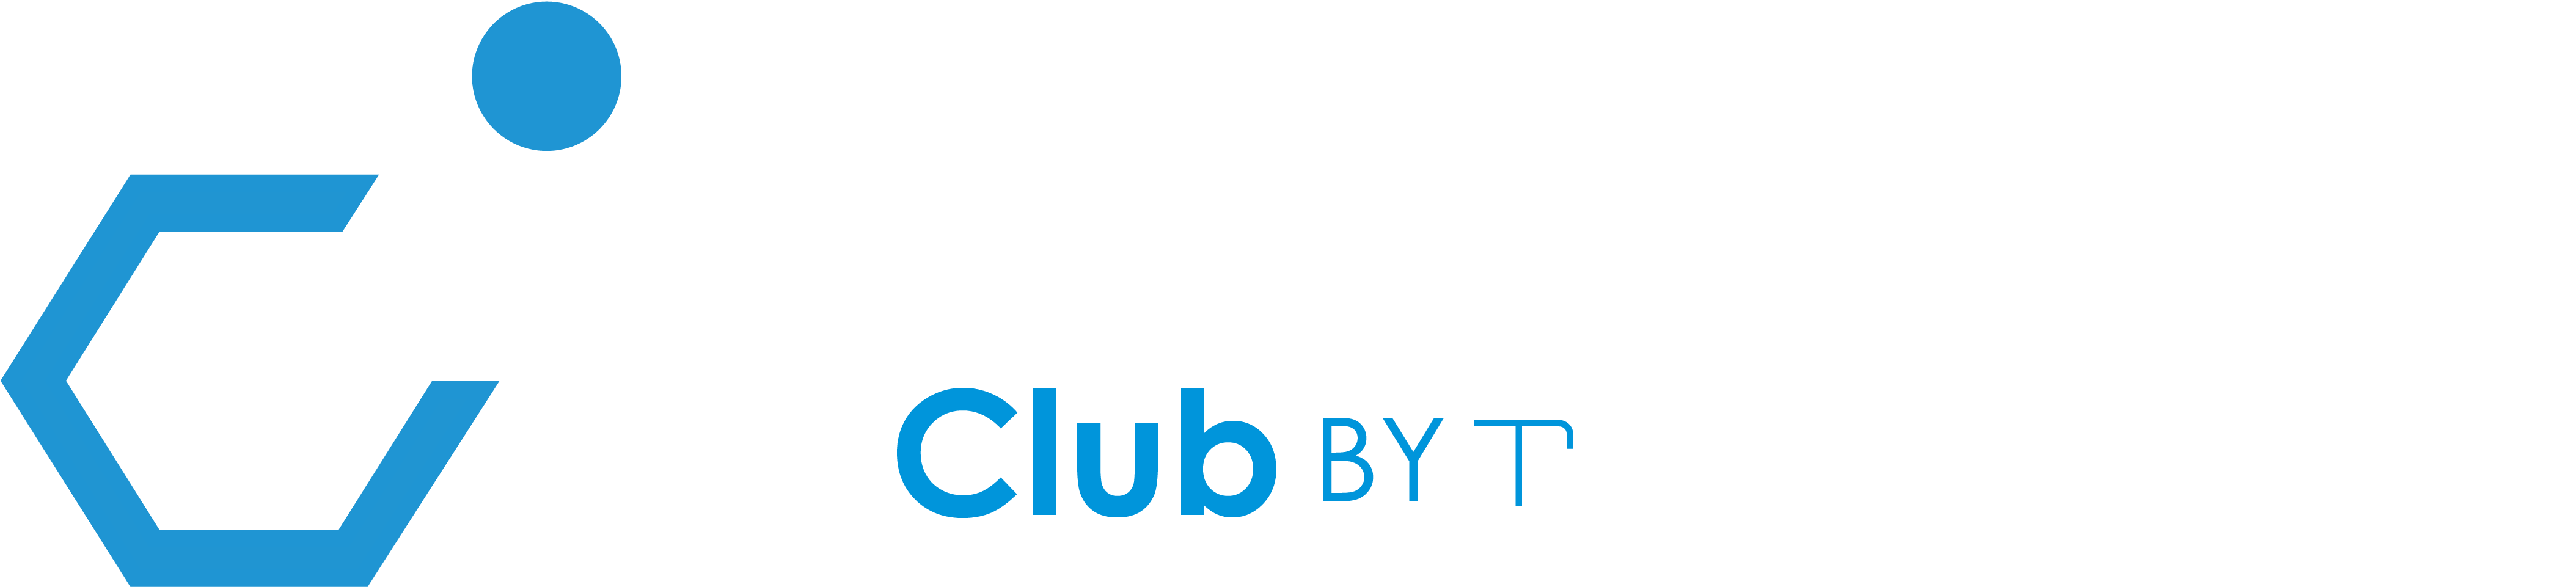 Club Digital Supply Chain TeamWork